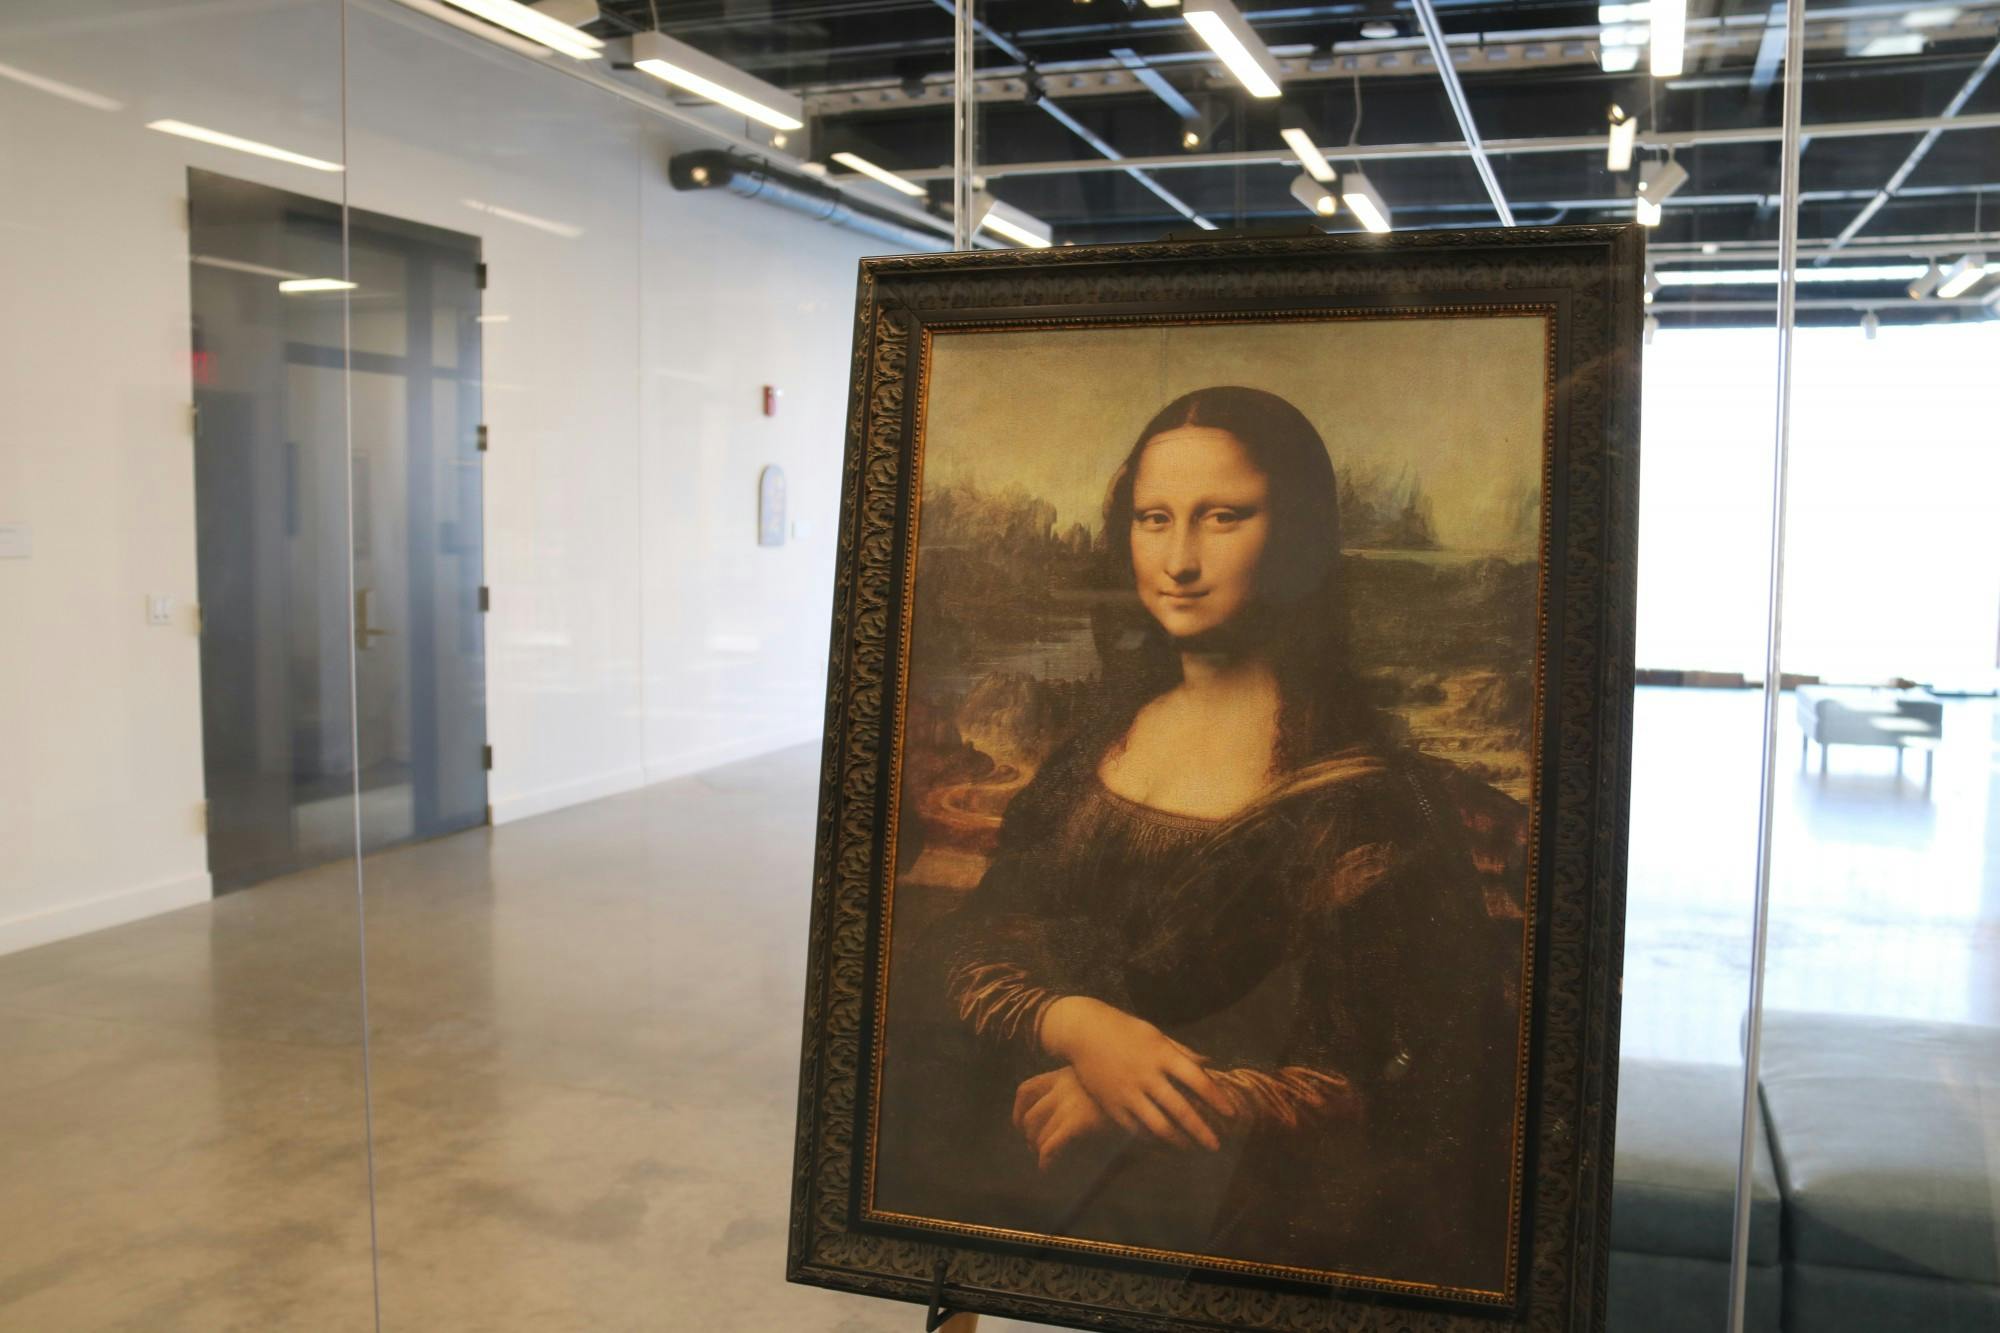 Da Vinci Exhibit